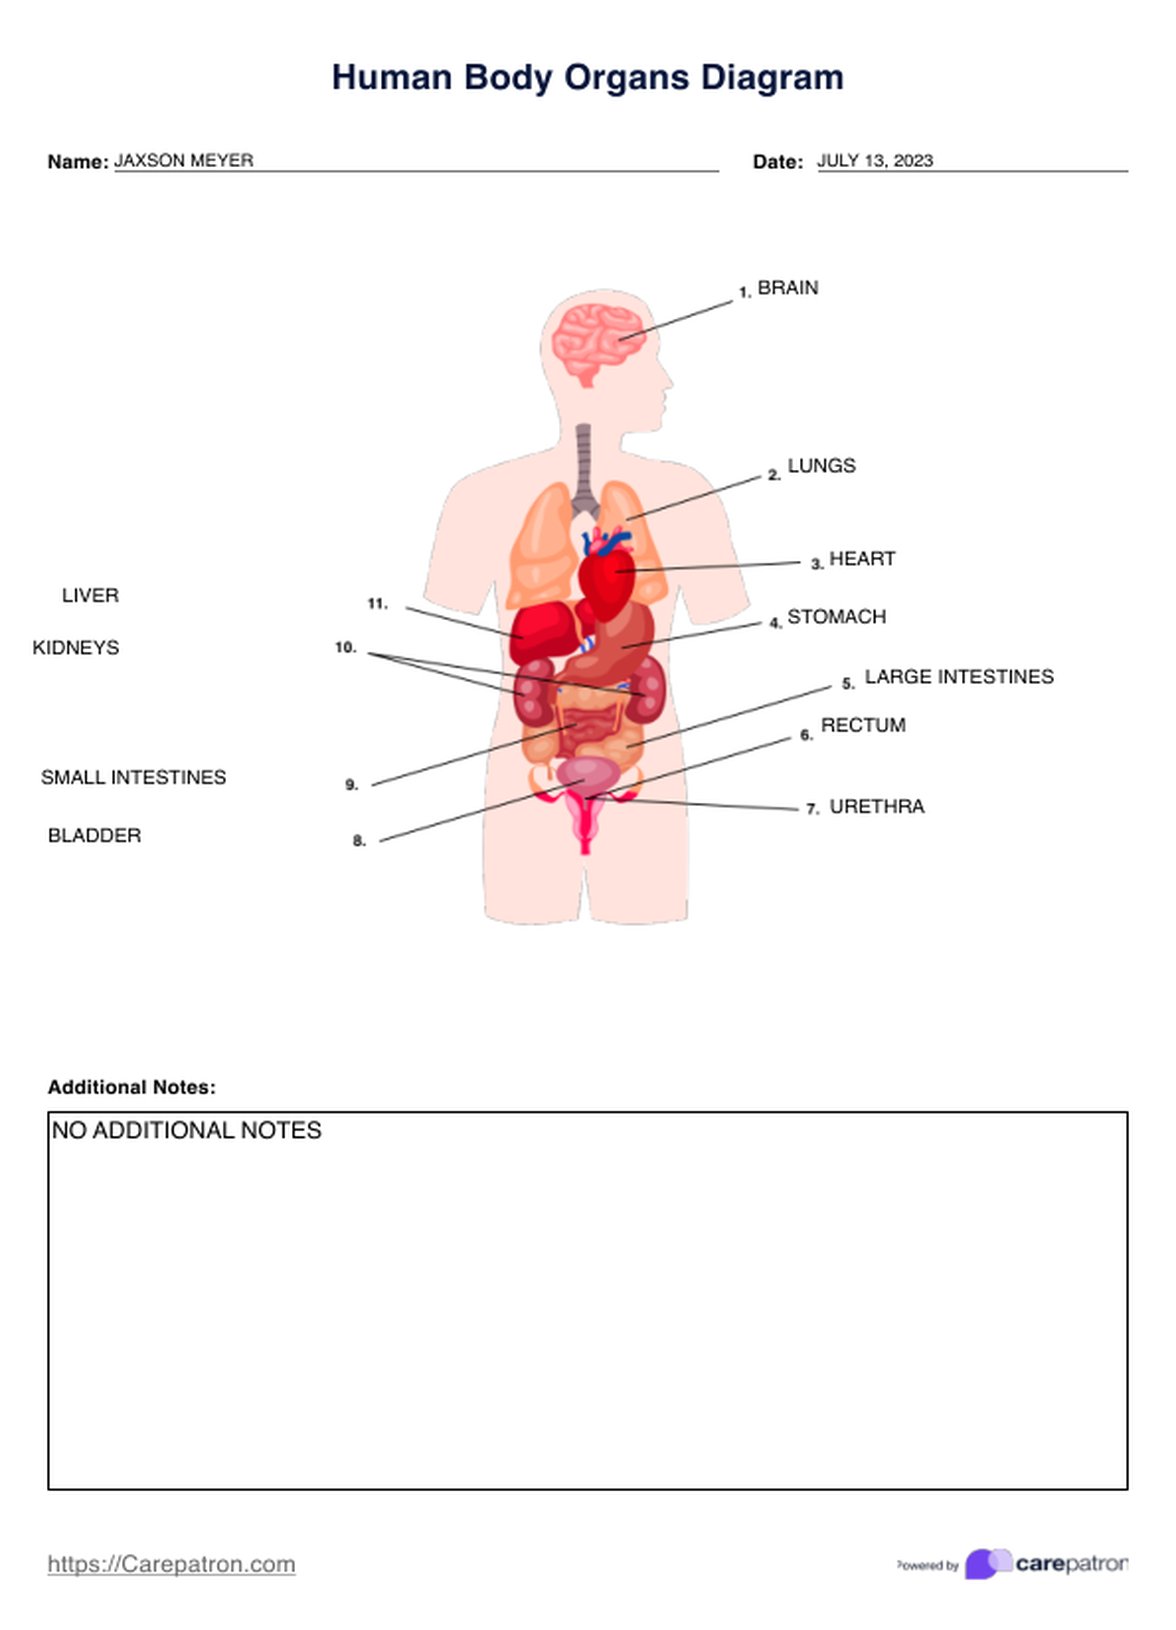 Human Body Organs Diagram PDF Example